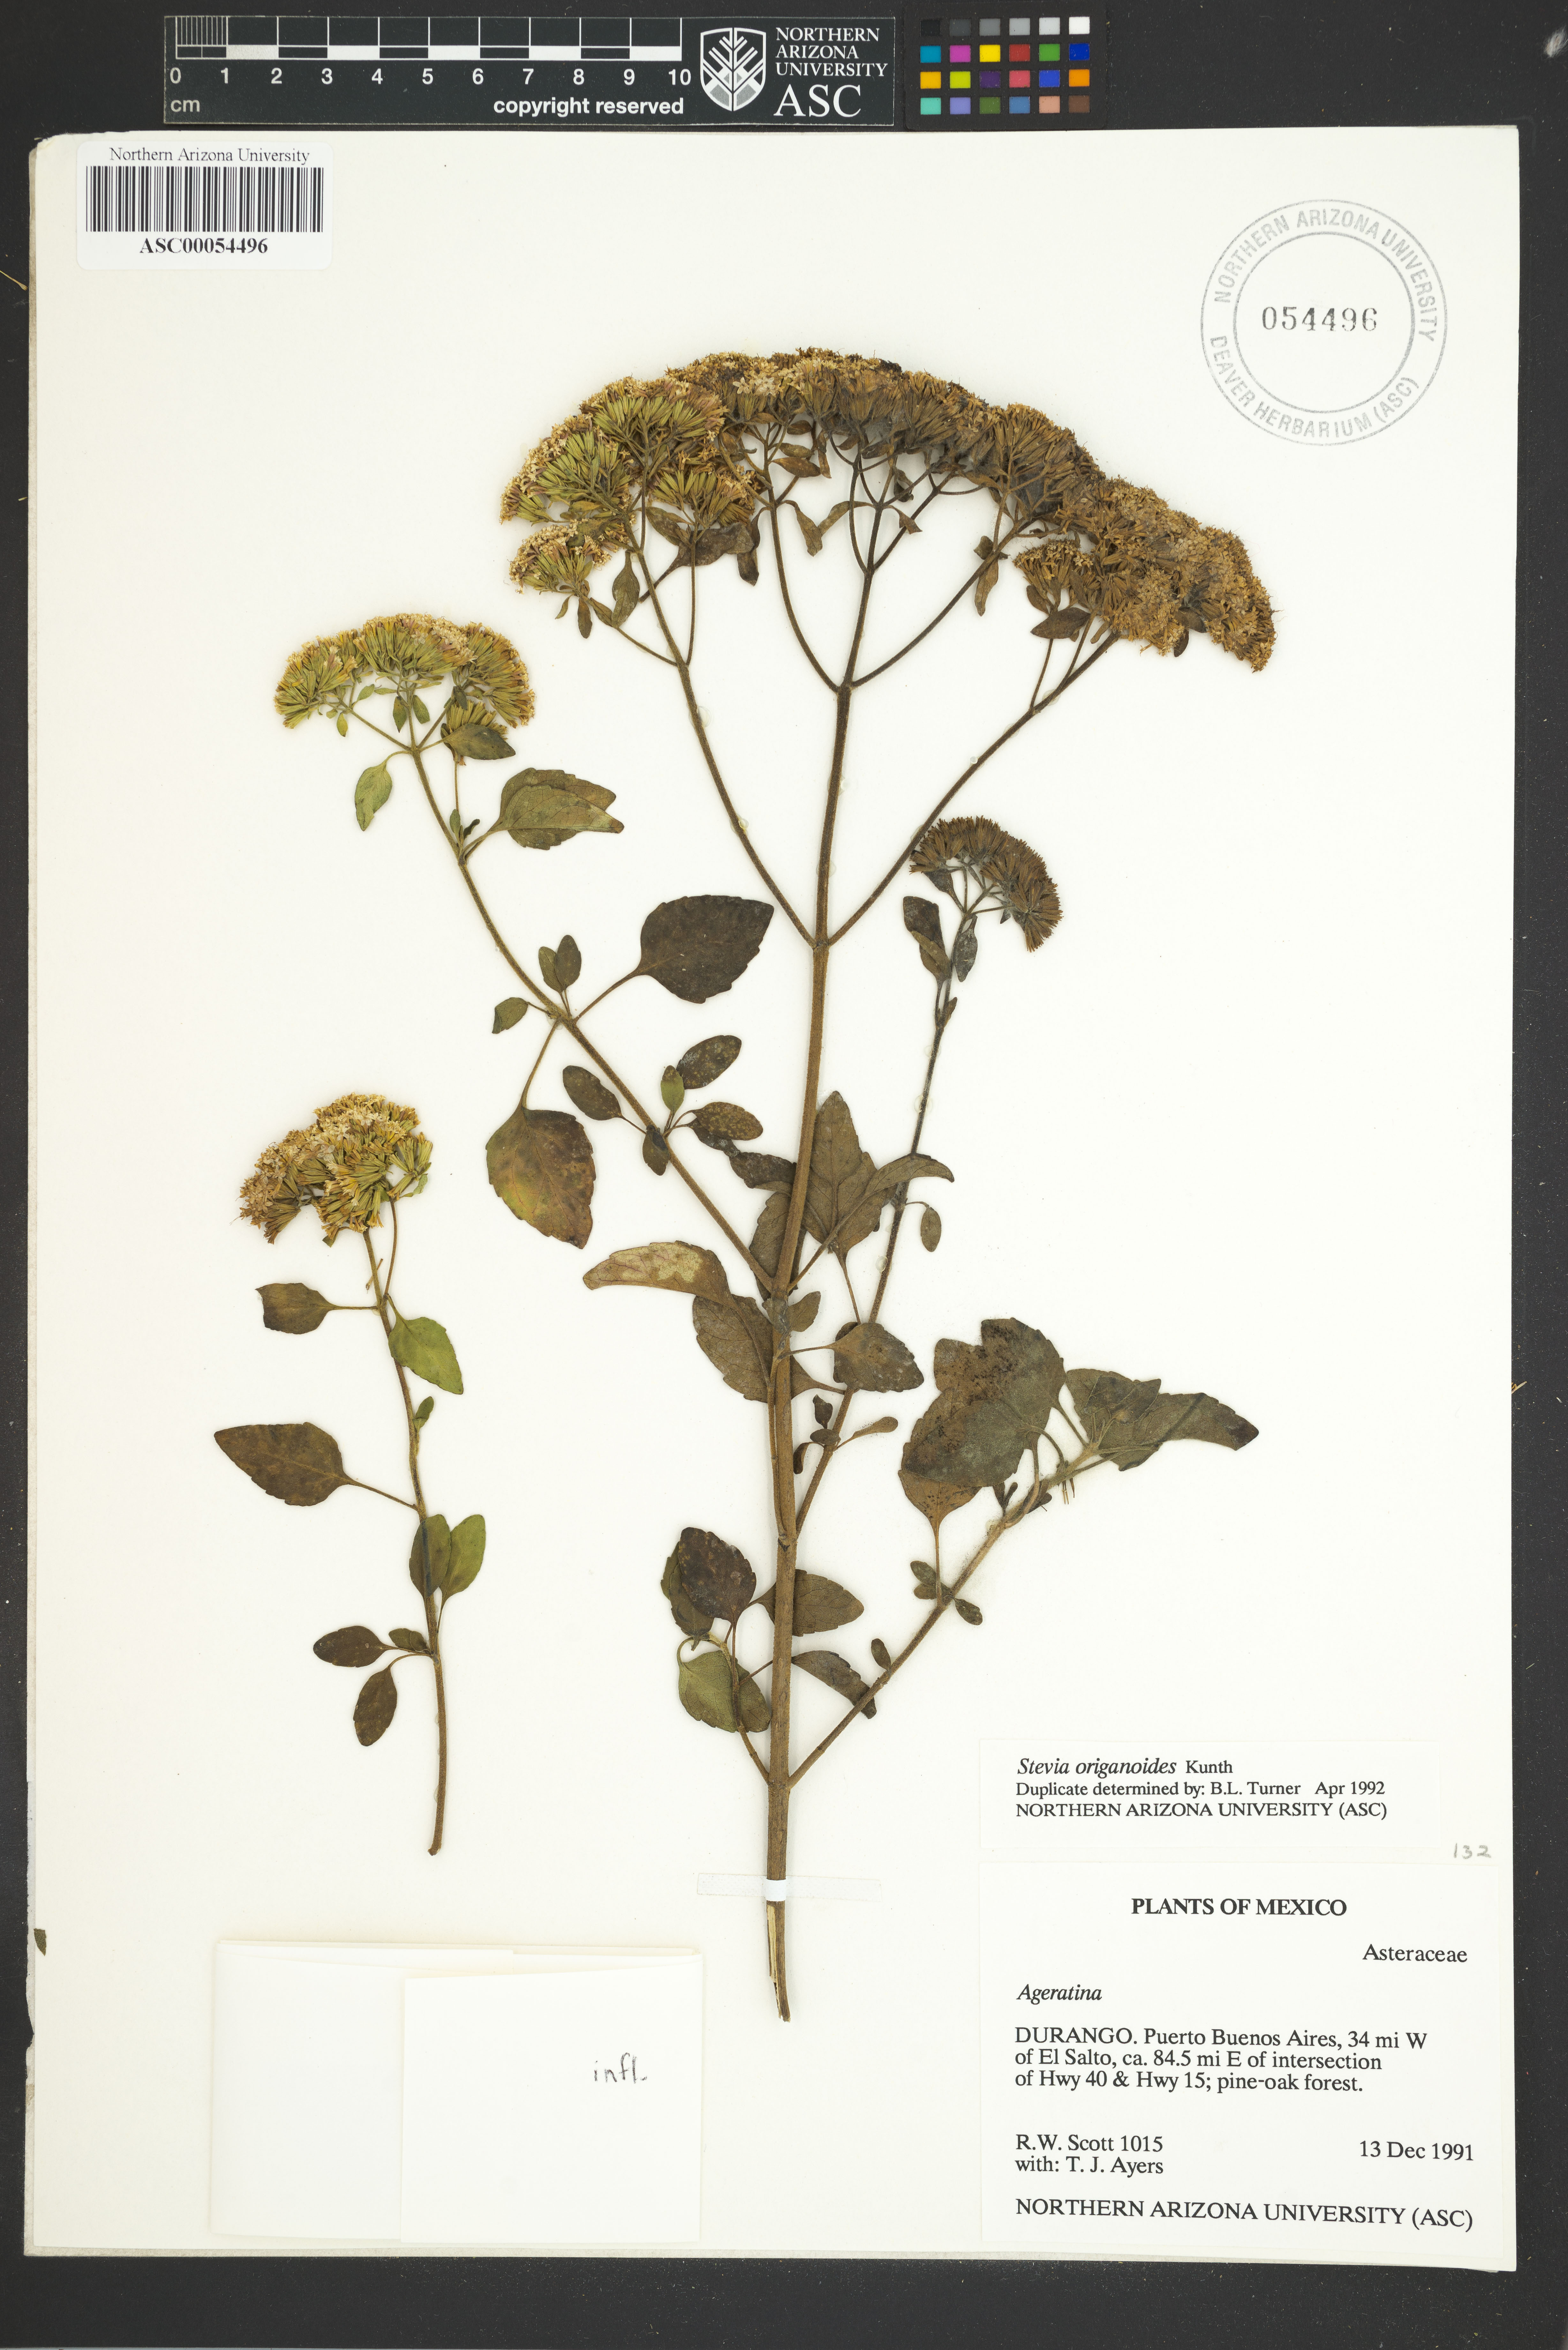 Stevia origanoides image